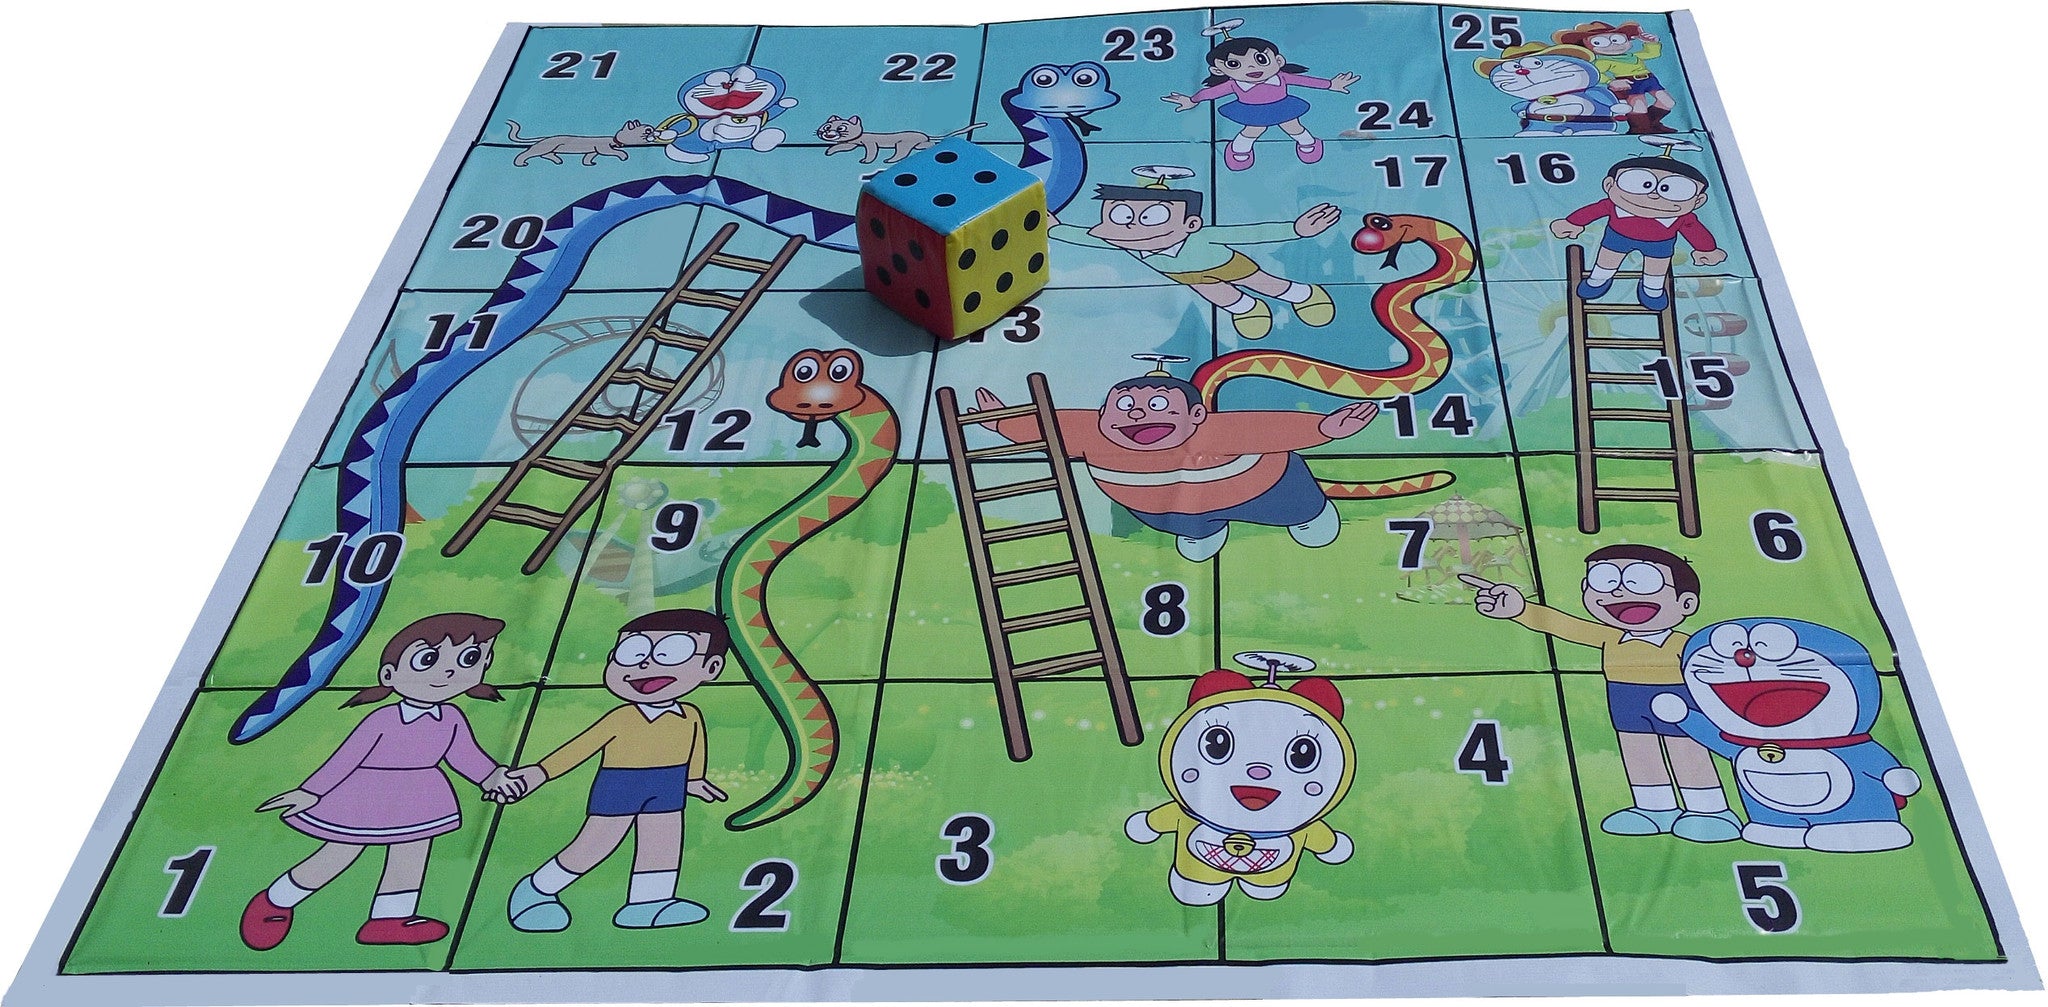 5x5 Ft Snakes Ladders Doraemon Theme Floor Mat With 8 Inch